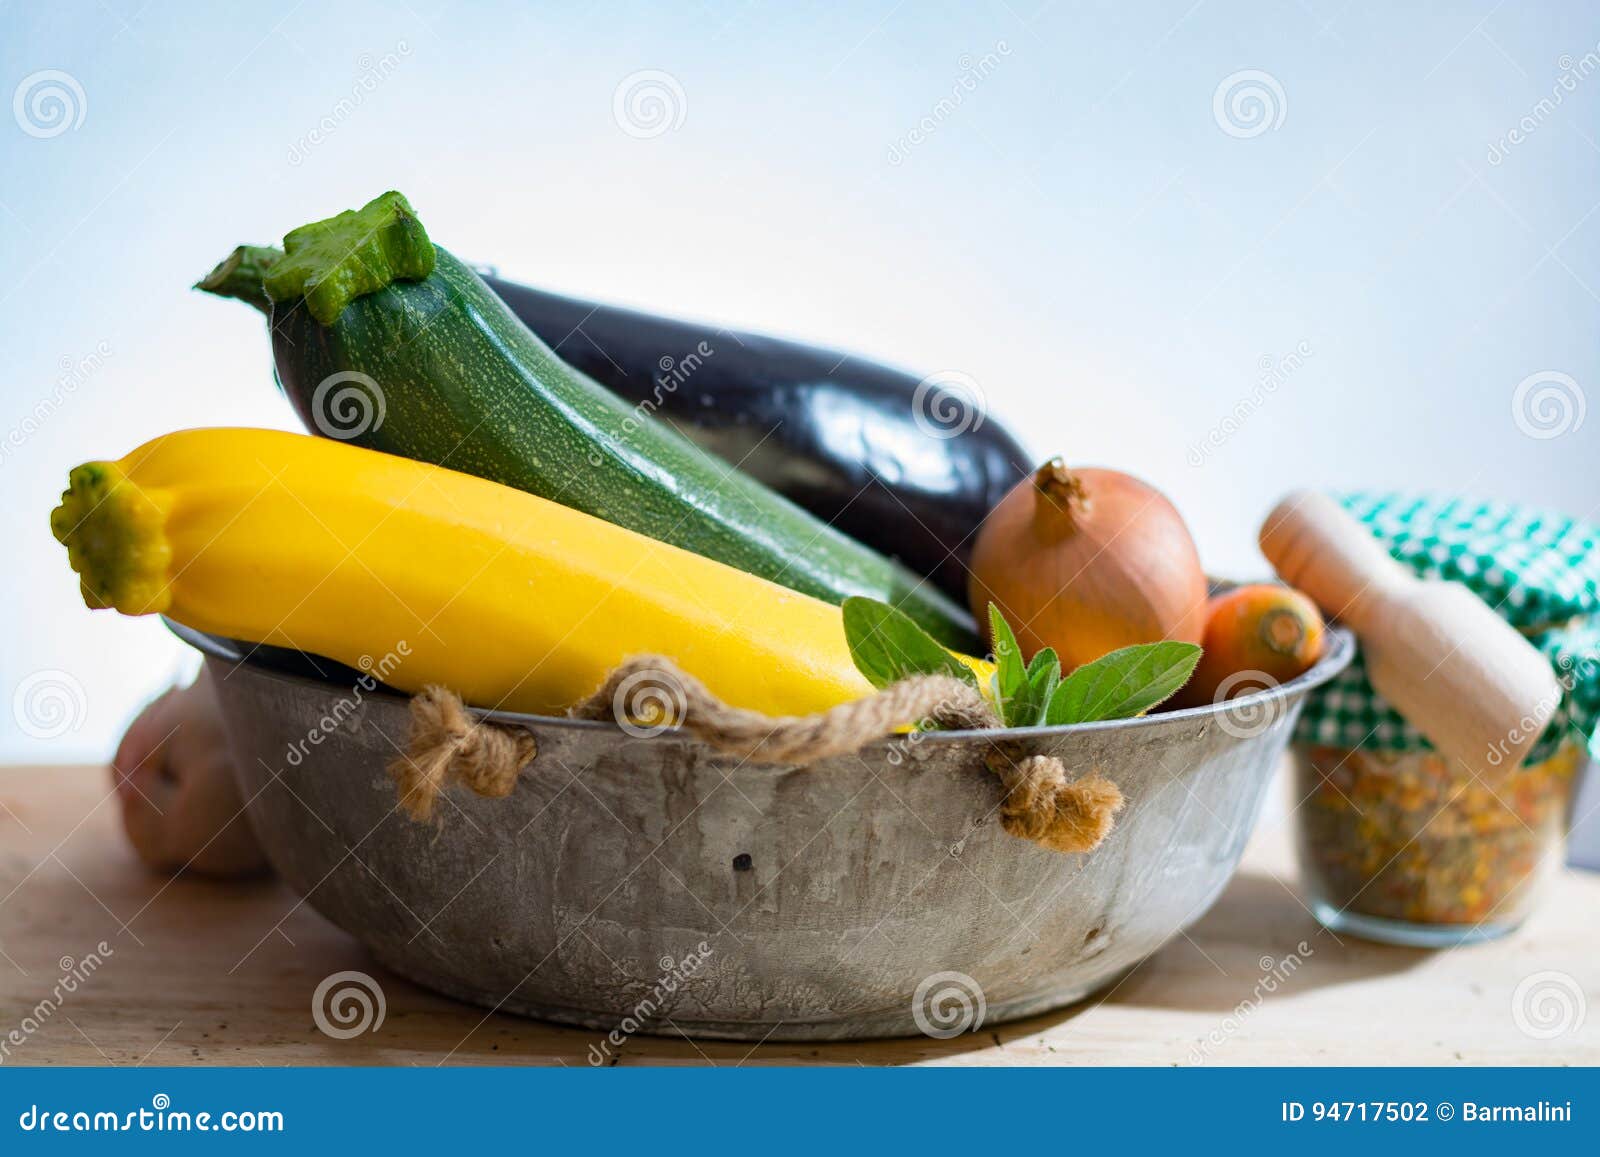 fresh various vegetables for garnish, soups, gastronomic dishes